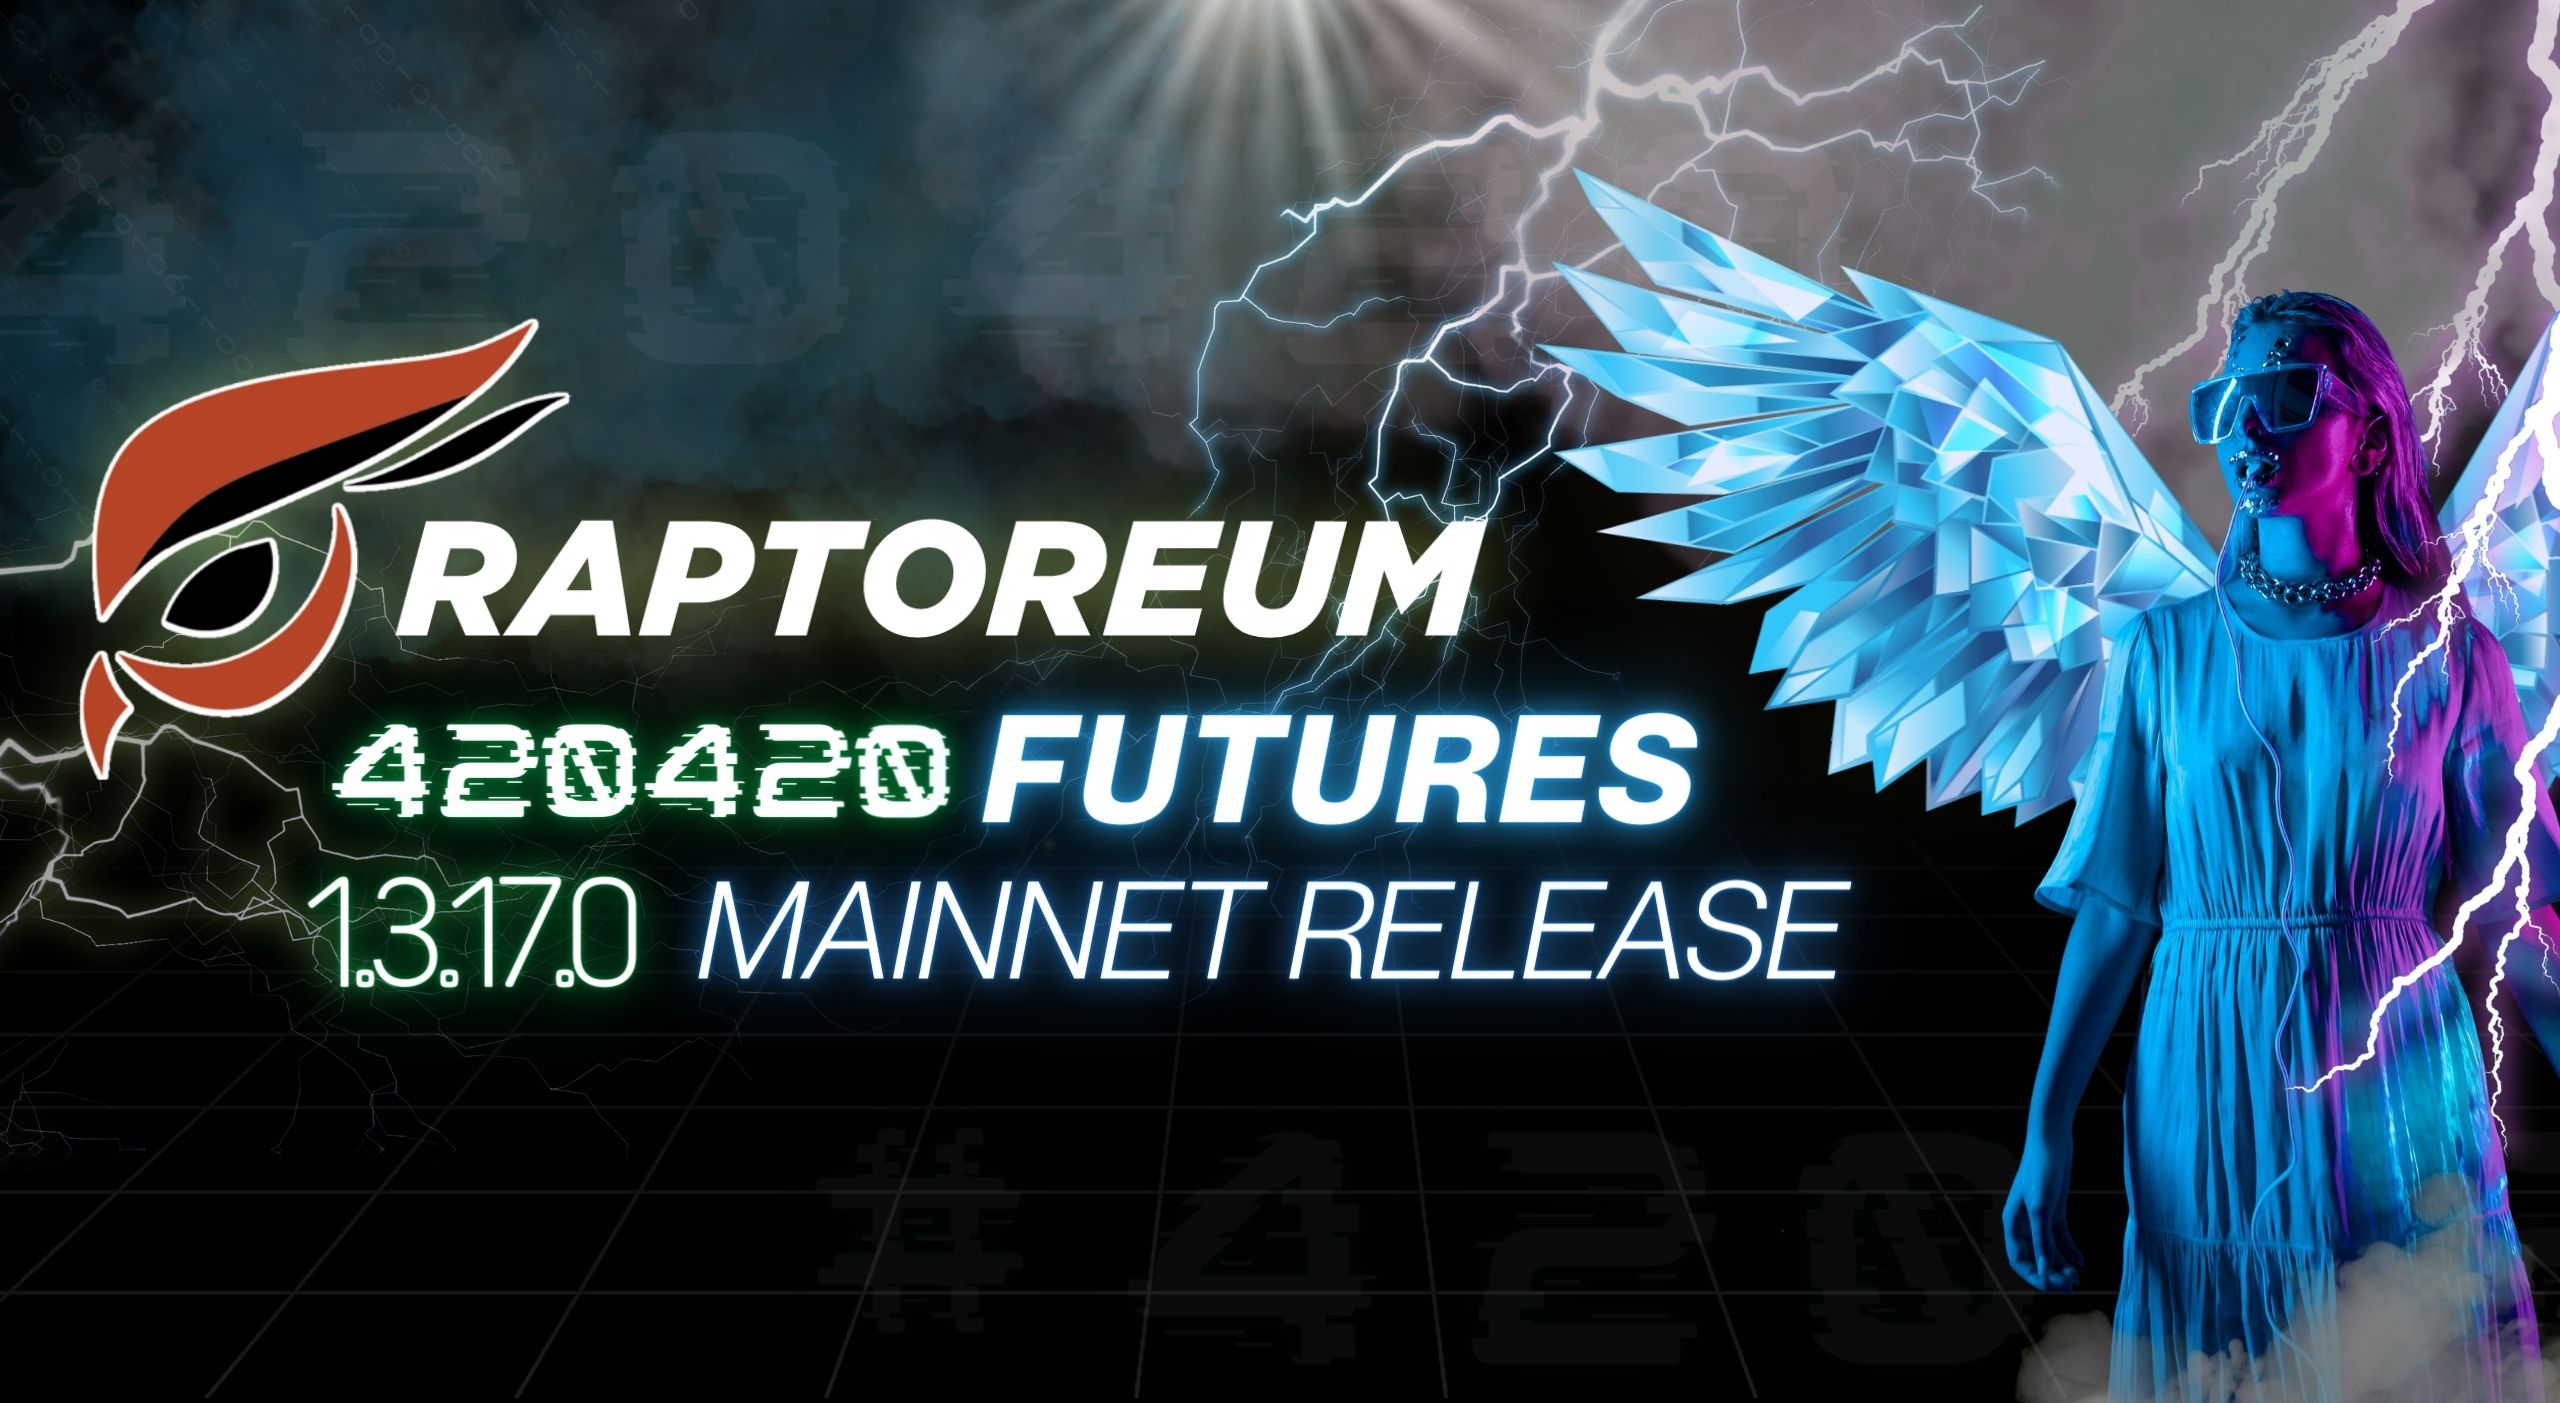 Raptoreum 420420 Futures Mainnet Code 1.3.17.0 IS HERE!